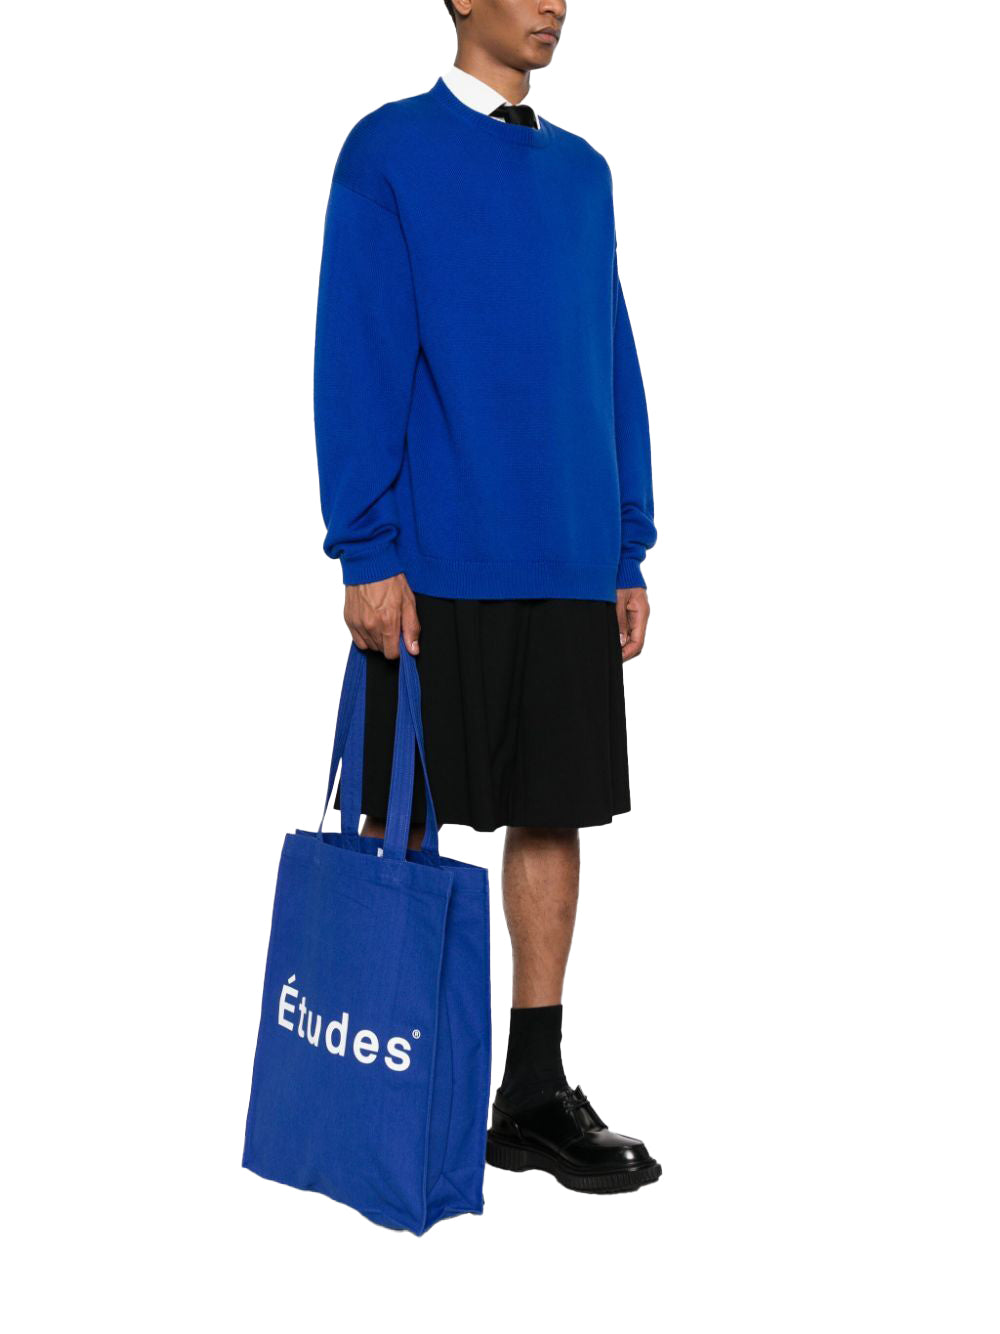 Blue November shopper bag